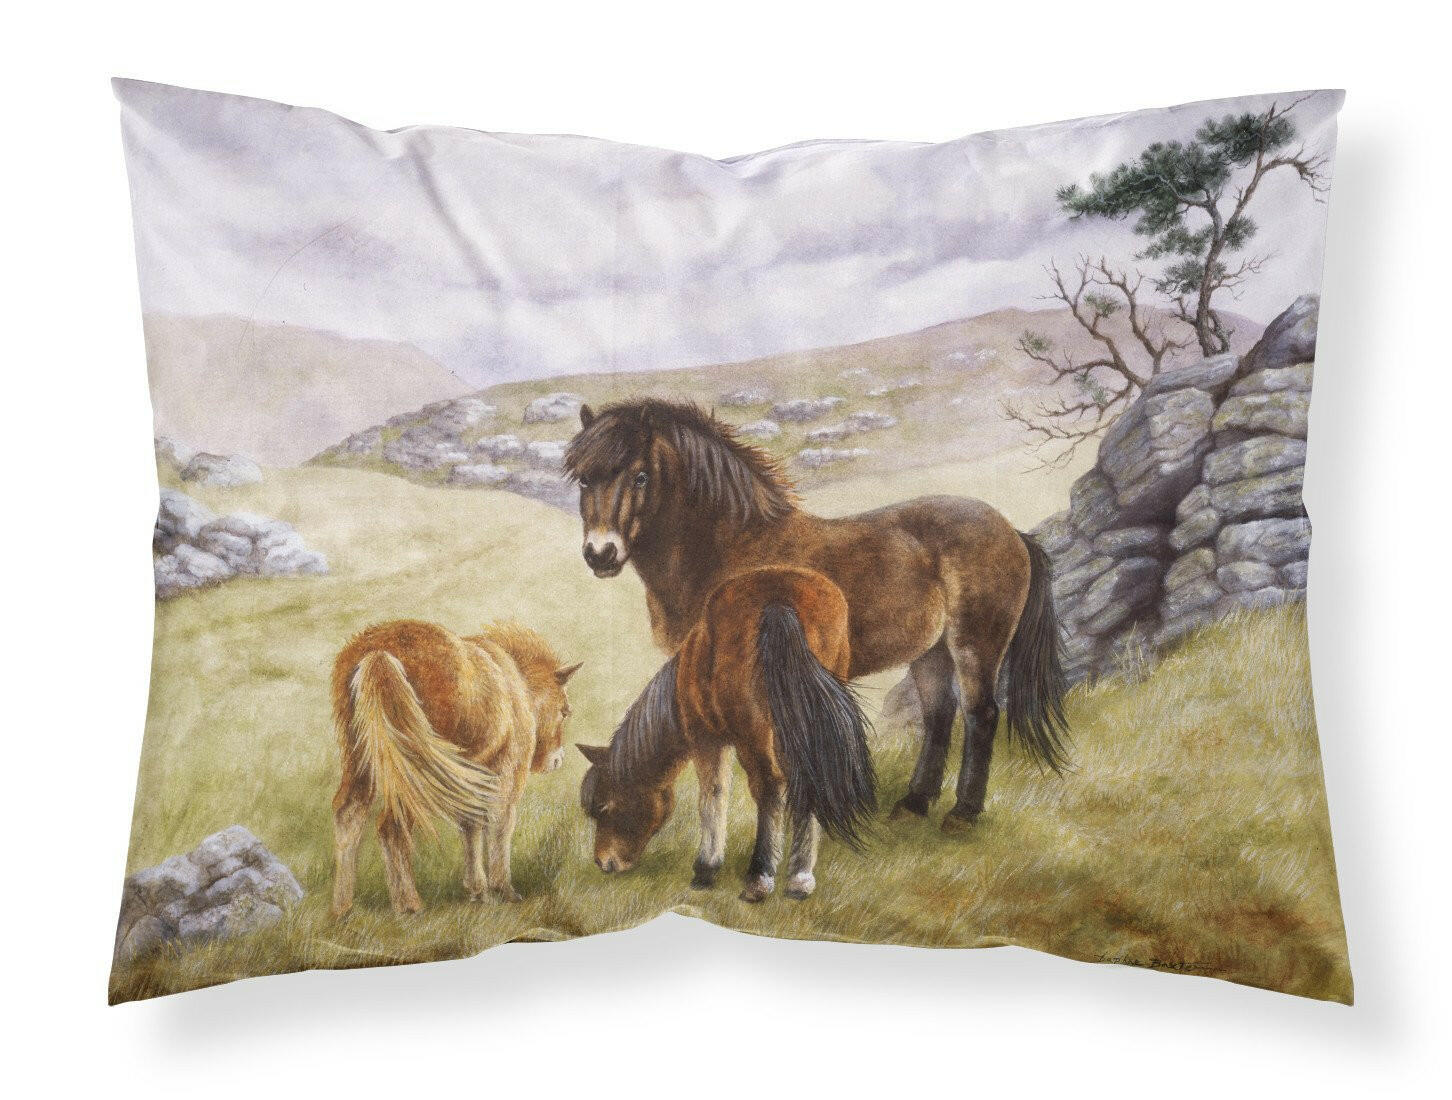 Horses in the Meadow Fabric Standard Pillowcase BDBA0189PILLOWCASE by Caroline's Treasures